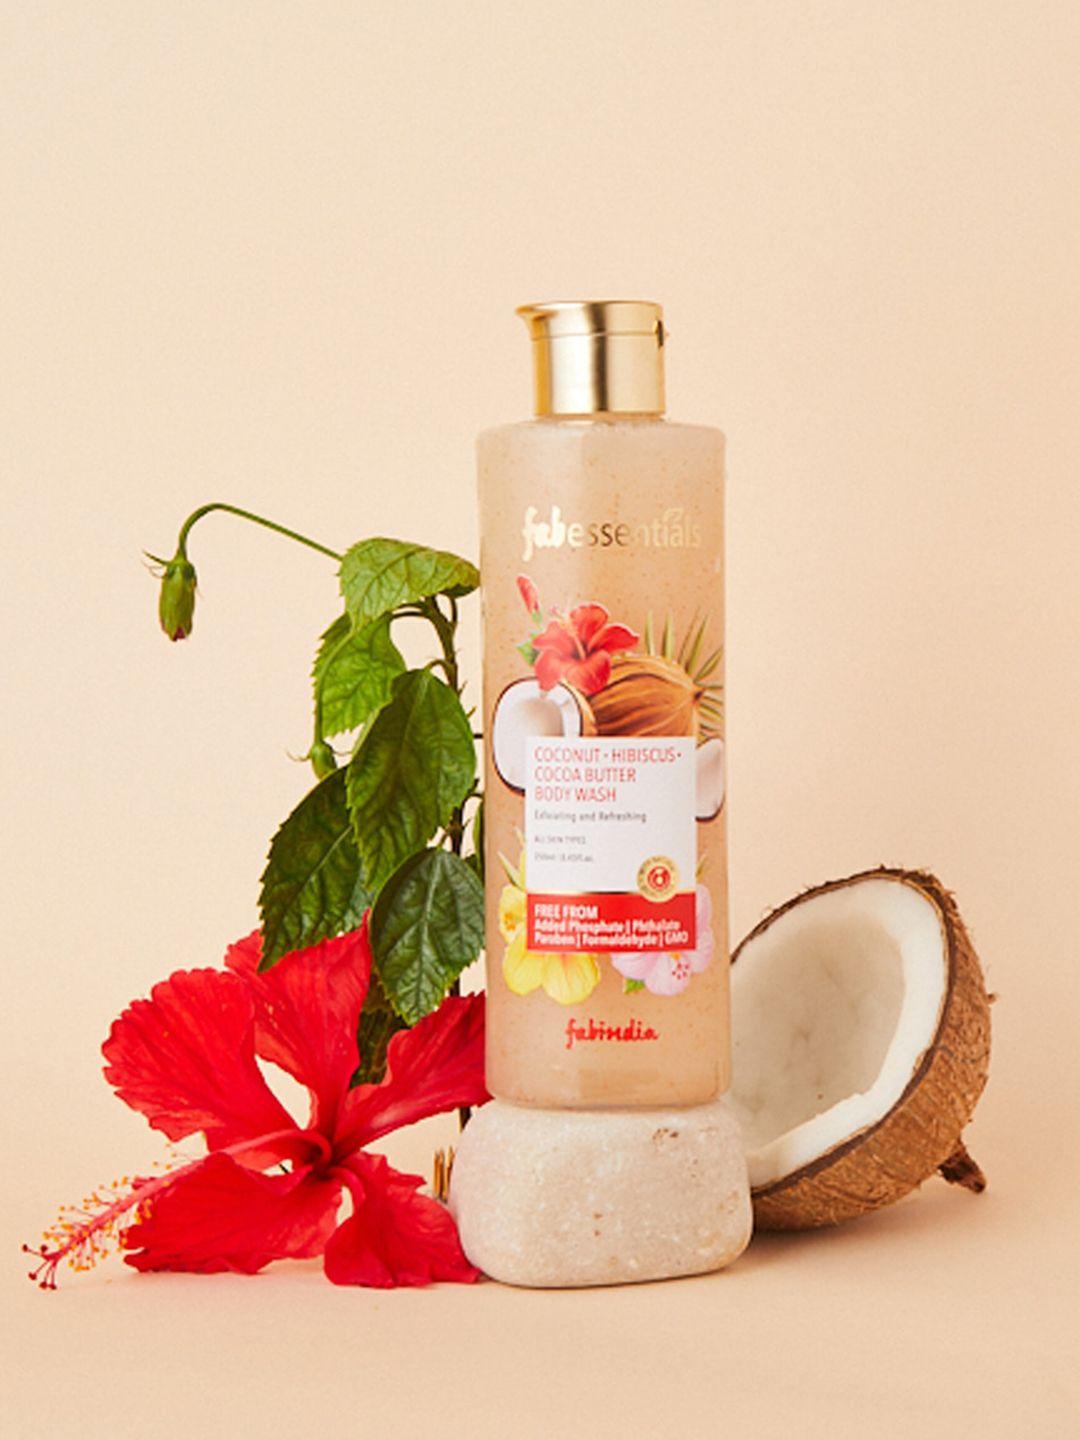 fabindia-coconut-hibiscus-cocoa-butter-body-wash---250-ml